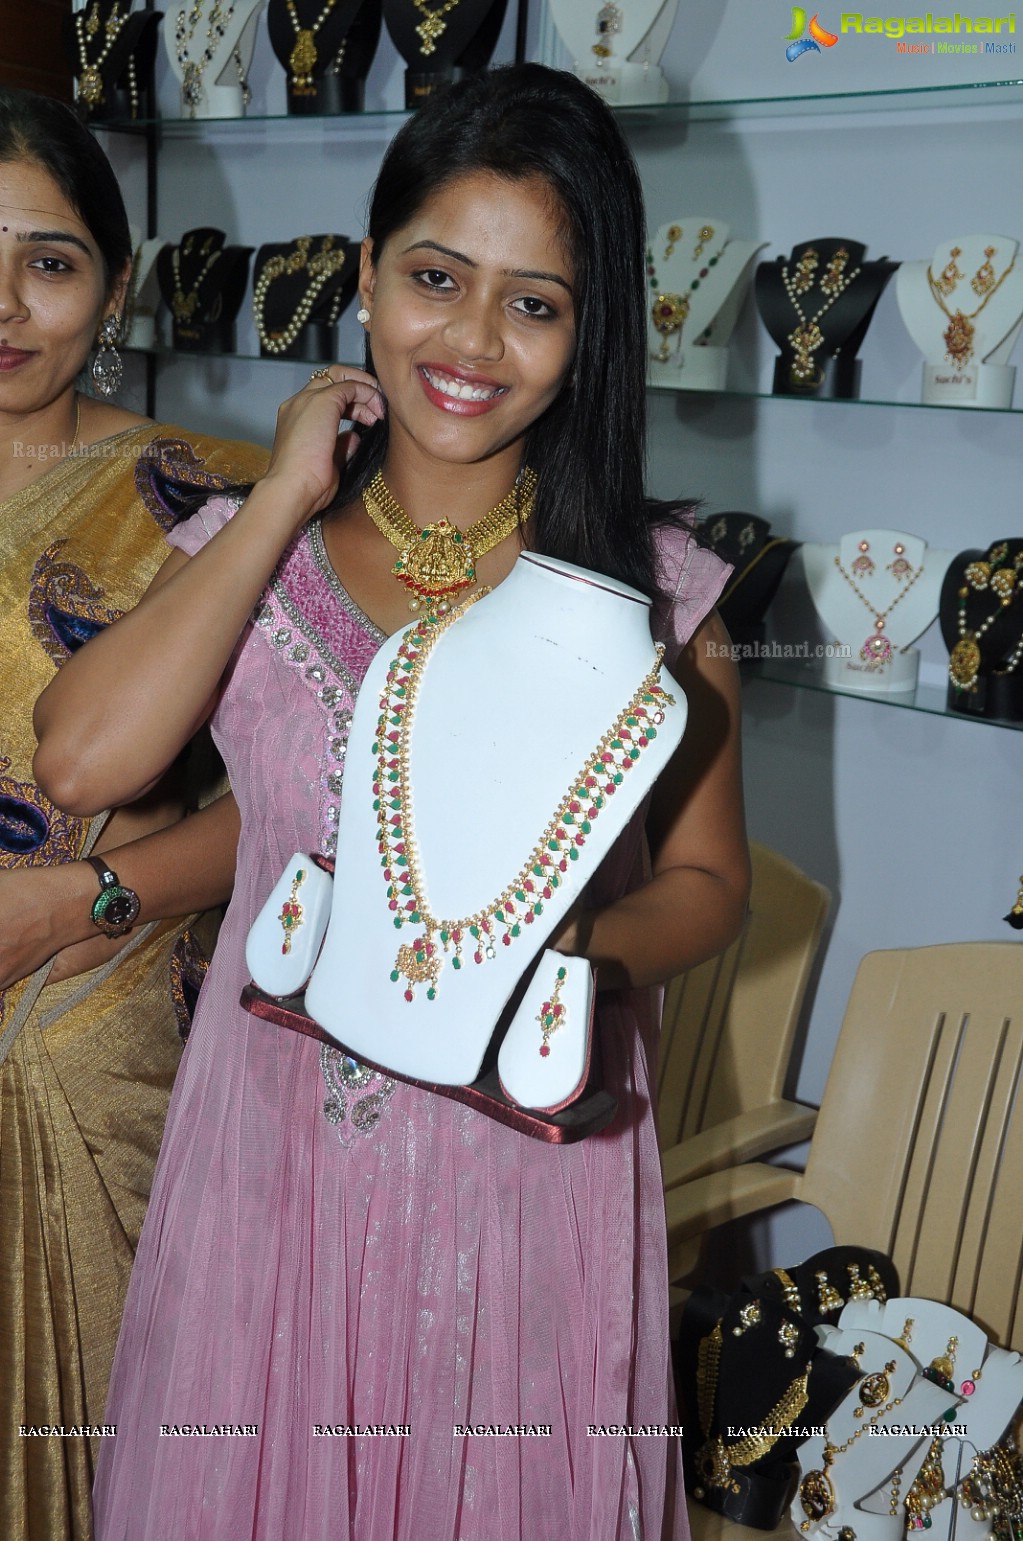 Parinaya Wedding Fair (February 2013) at Sathya Sai Nigamagamam, Hyderabad